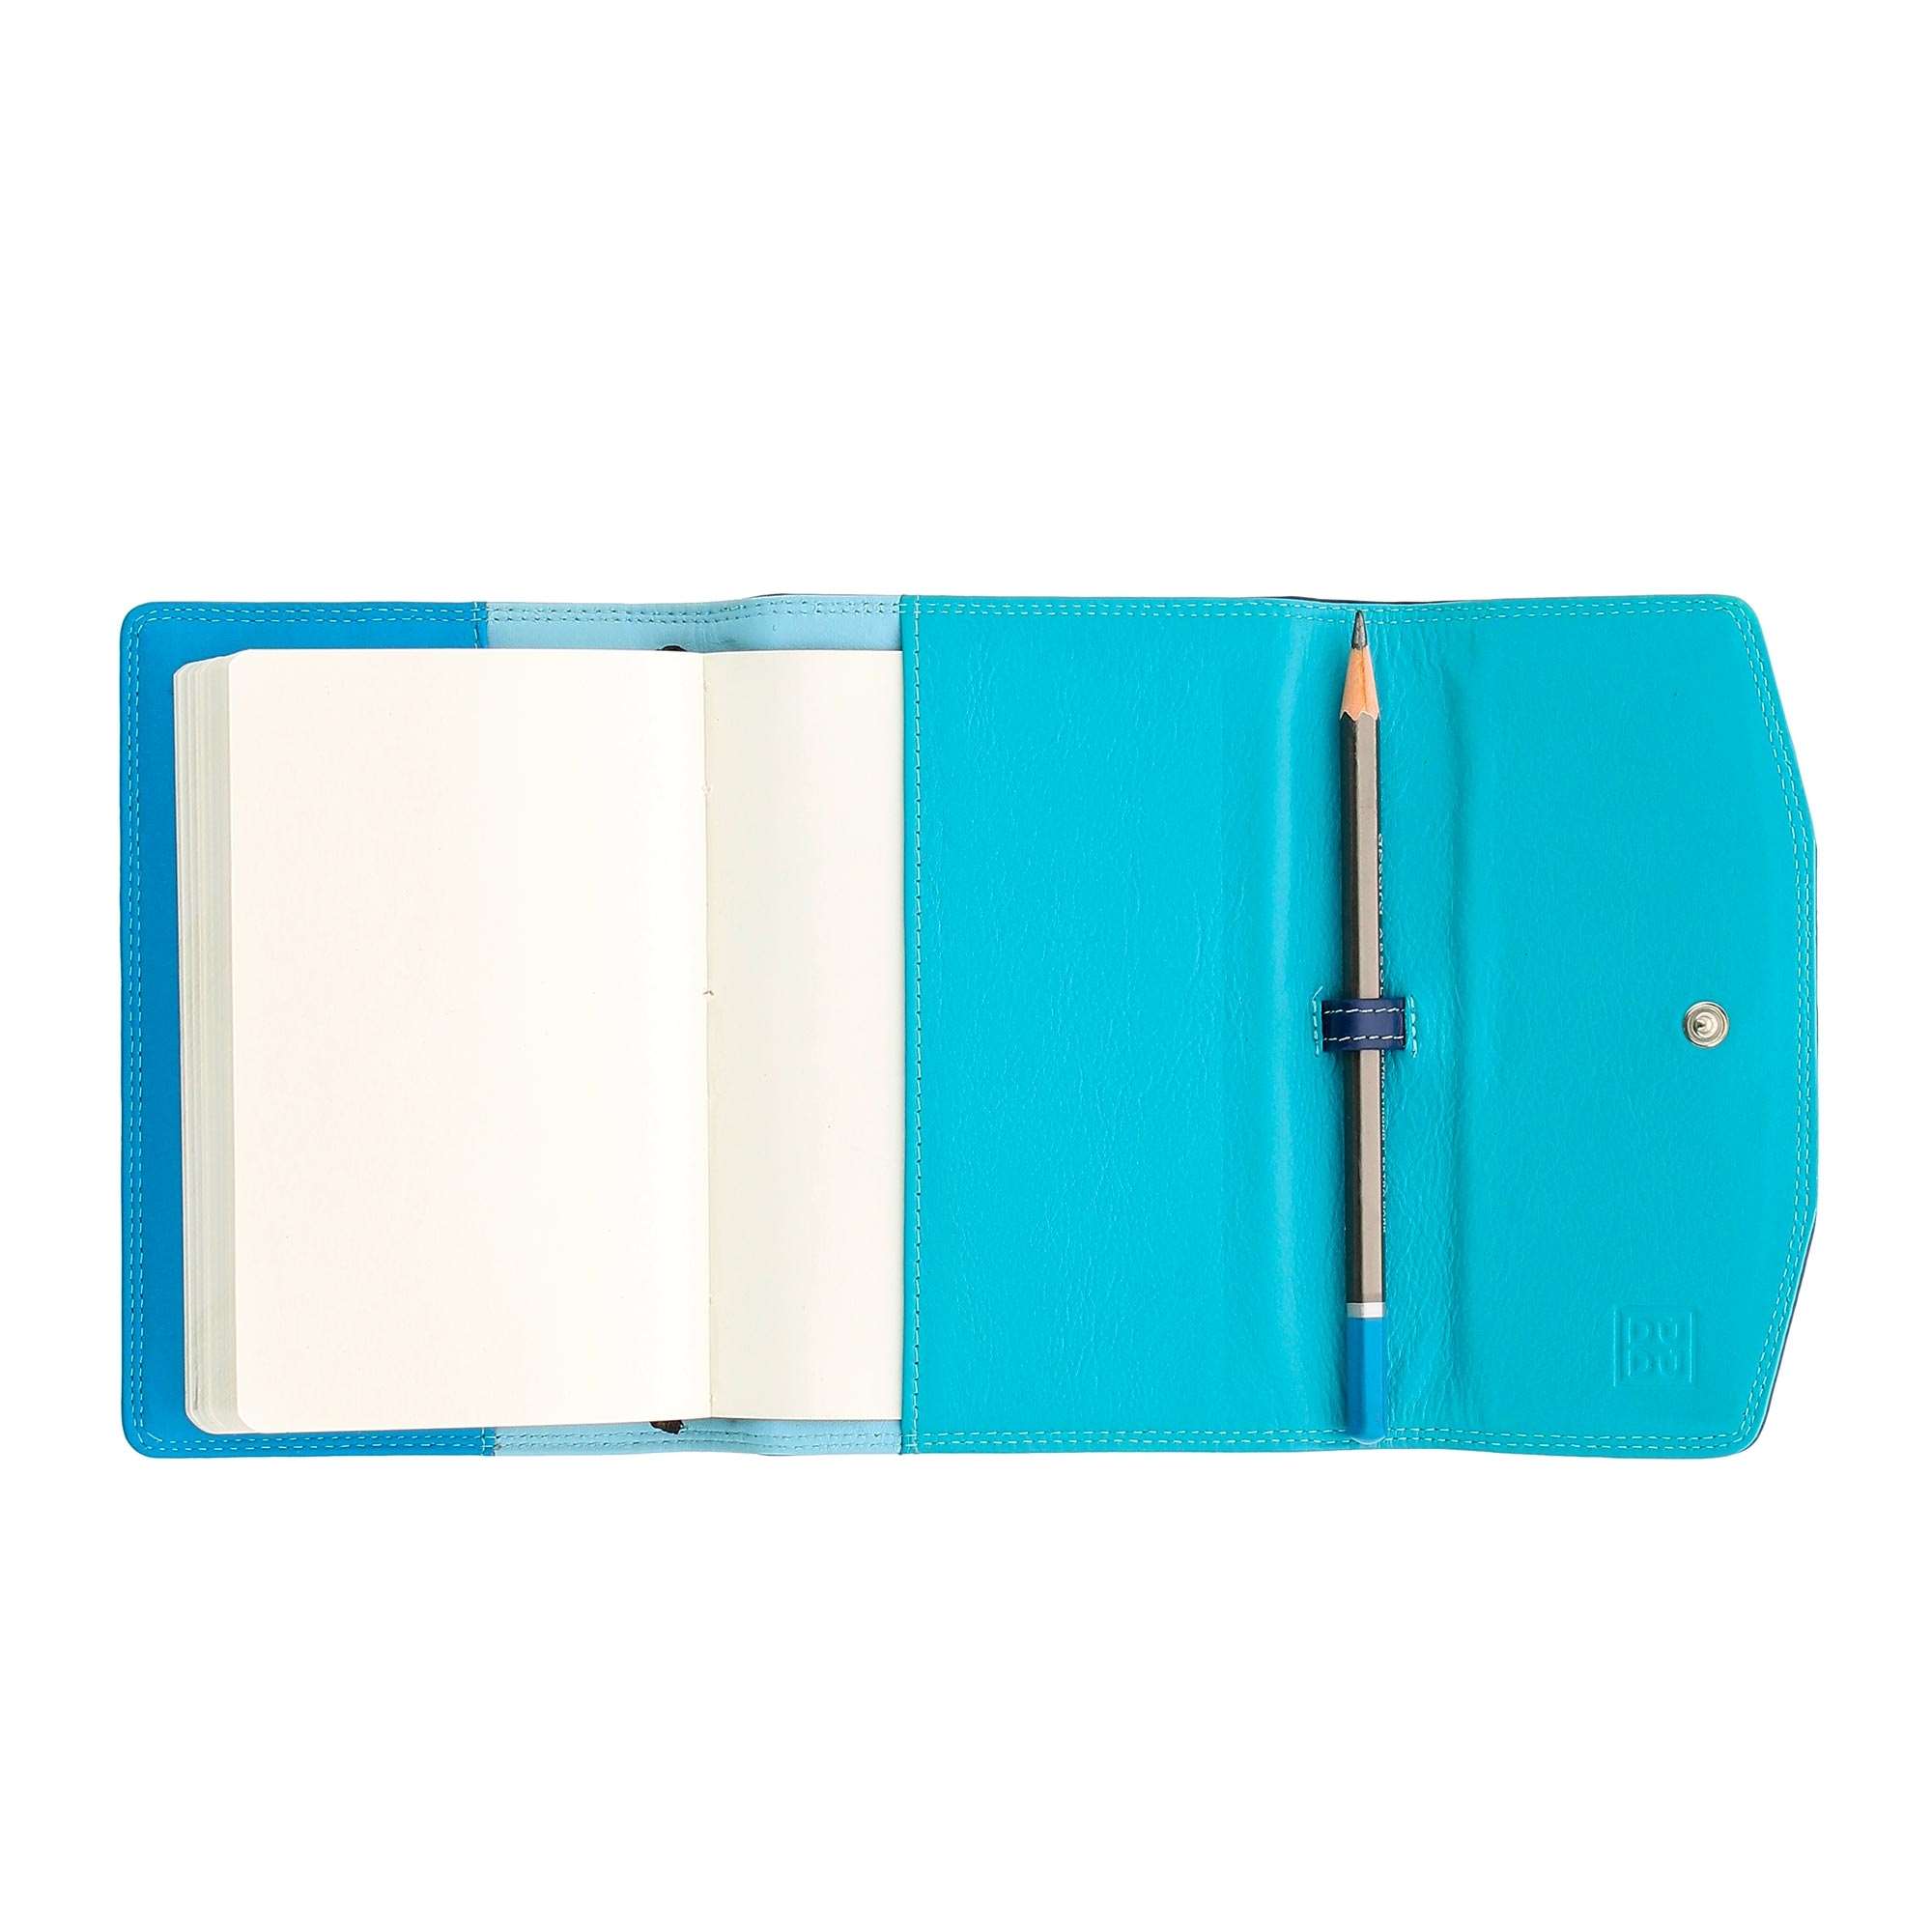 Porte agenda - Collection Colorful - Rodi - Bleu - unisexe